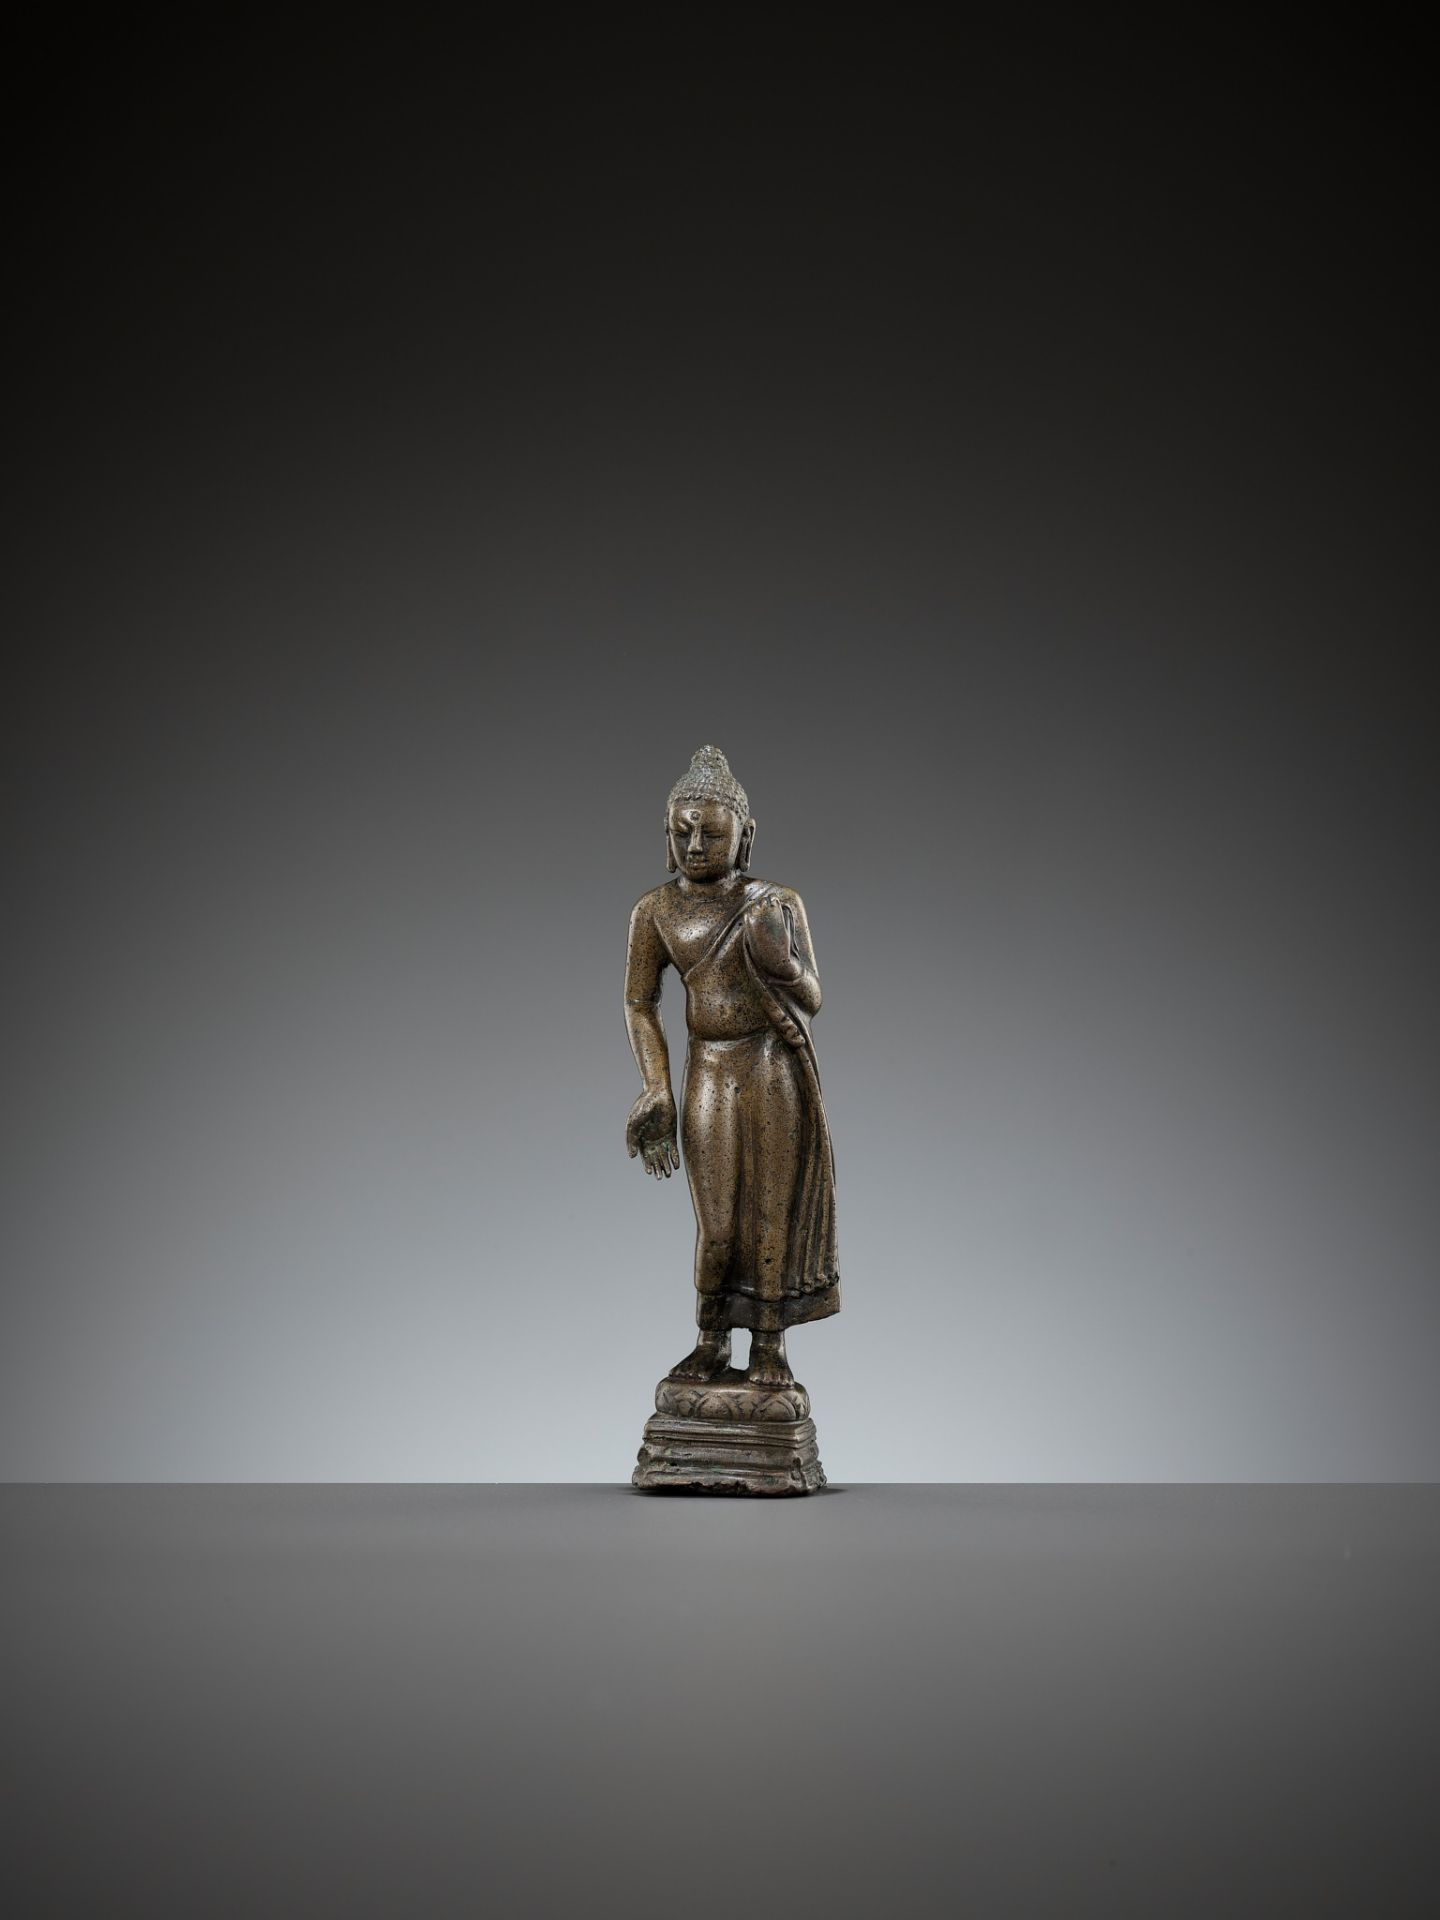 A BRONZE FIGURE OF A STANDING BUDDHA, POST-GUPTA PERIOD, INDIA, C. 7TH CENTURY - Image 3 of 15